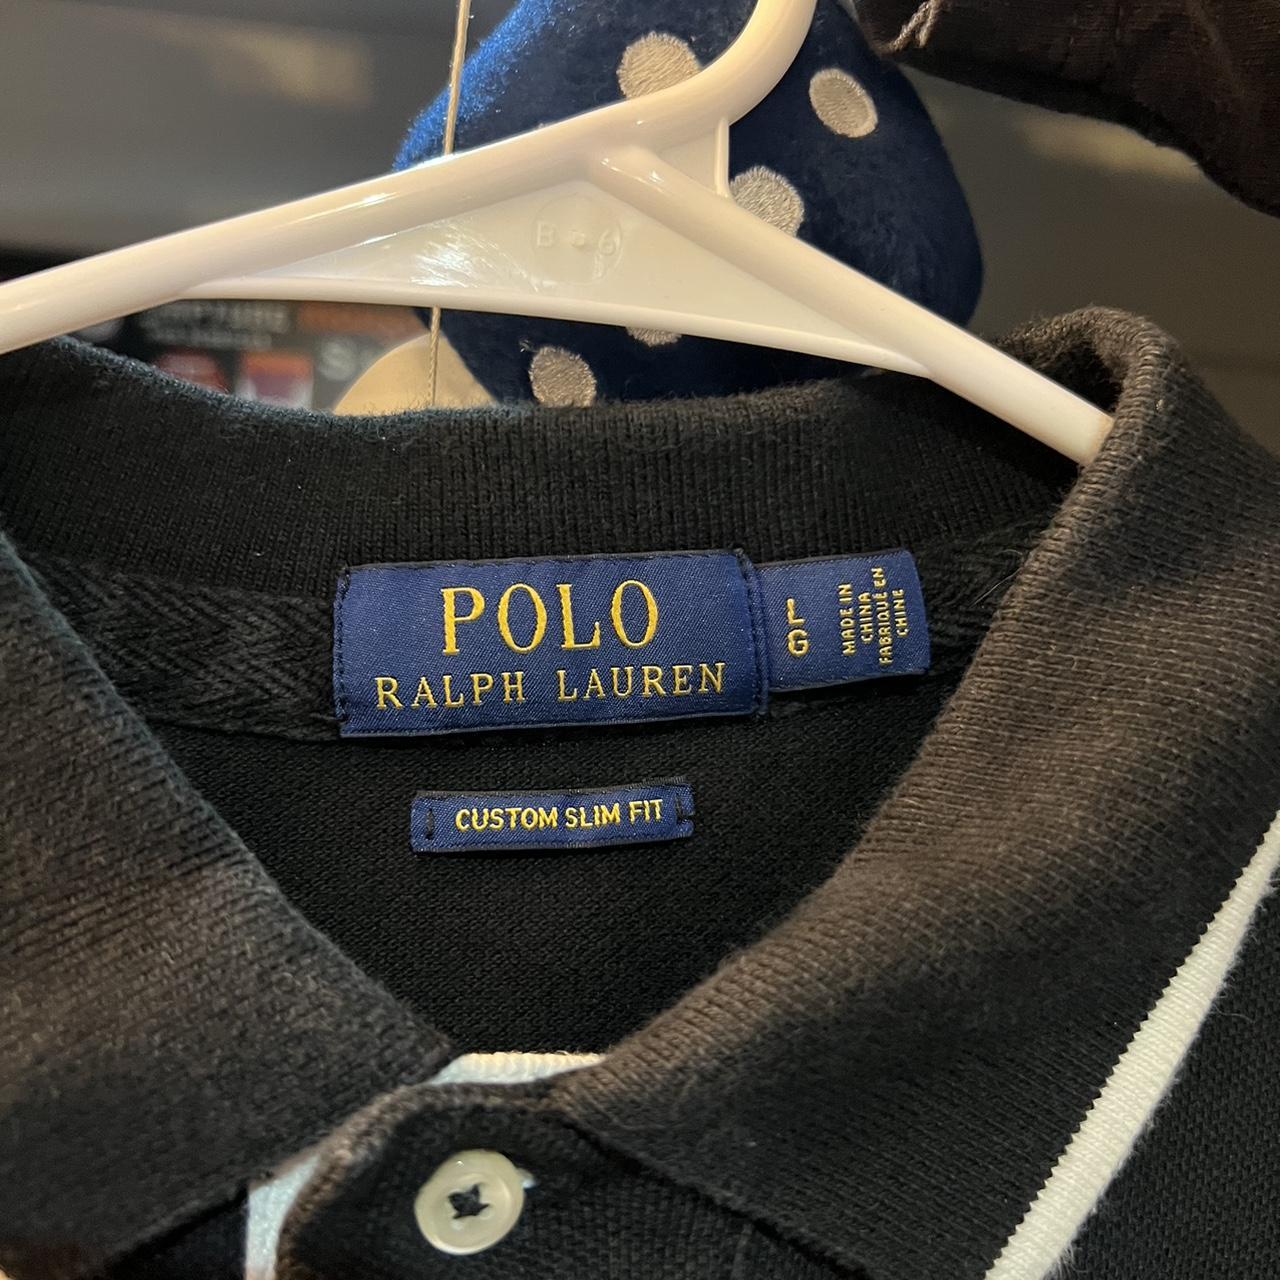 Polo Ralph Lauren Shirt “Las Vegas” Chief keef polo... - Depop